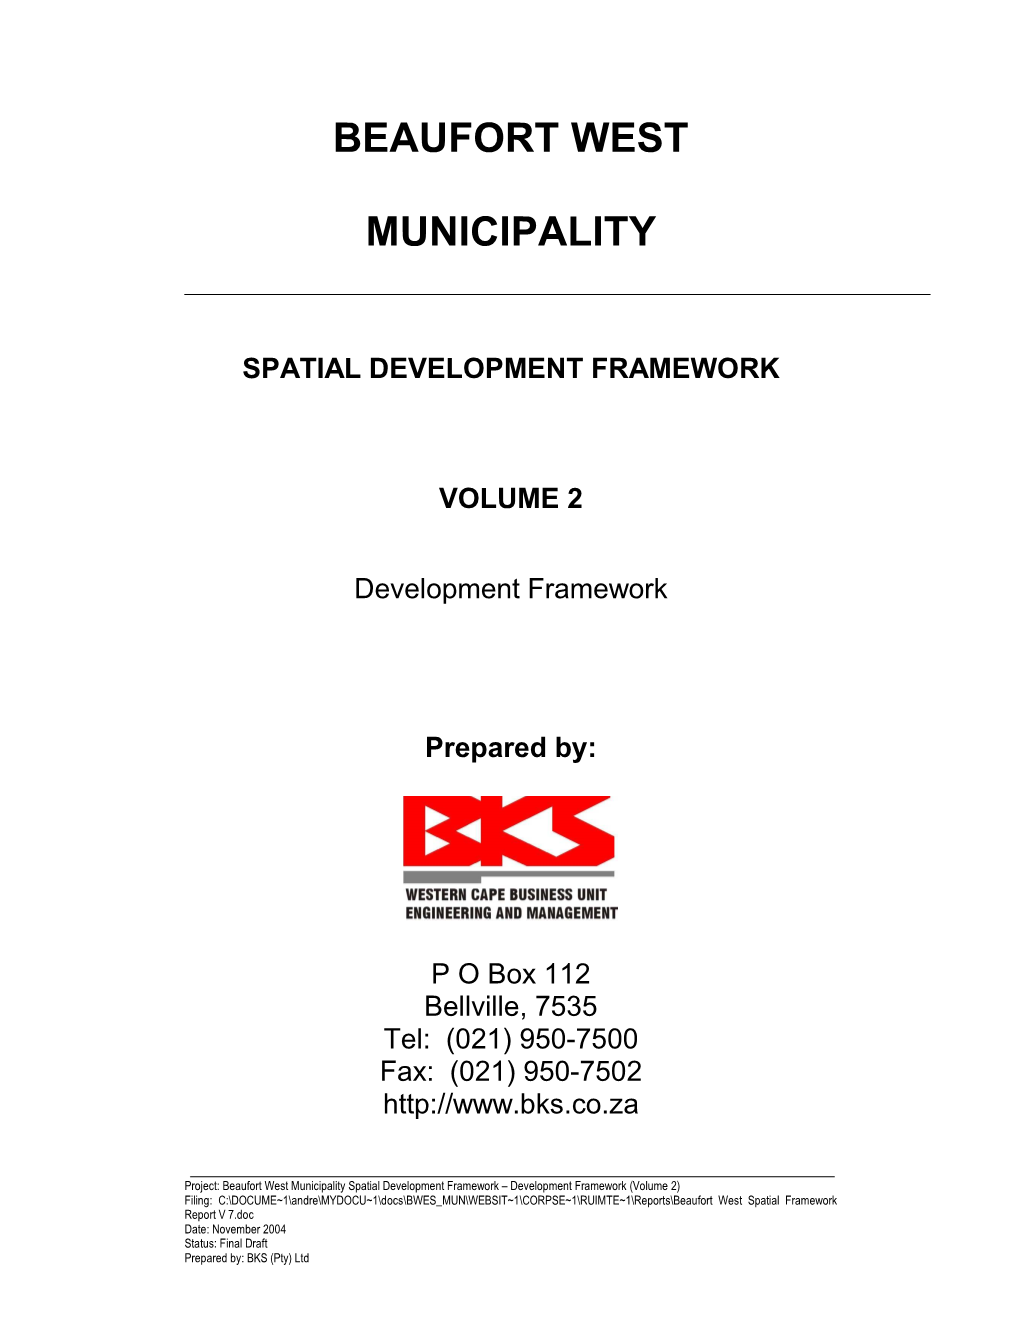 Beaufort West Spatial Framework Report V 7.Doc Date: November 2004 Status: Final Draft Prepared By: BKS (Pty) Ltd Page I